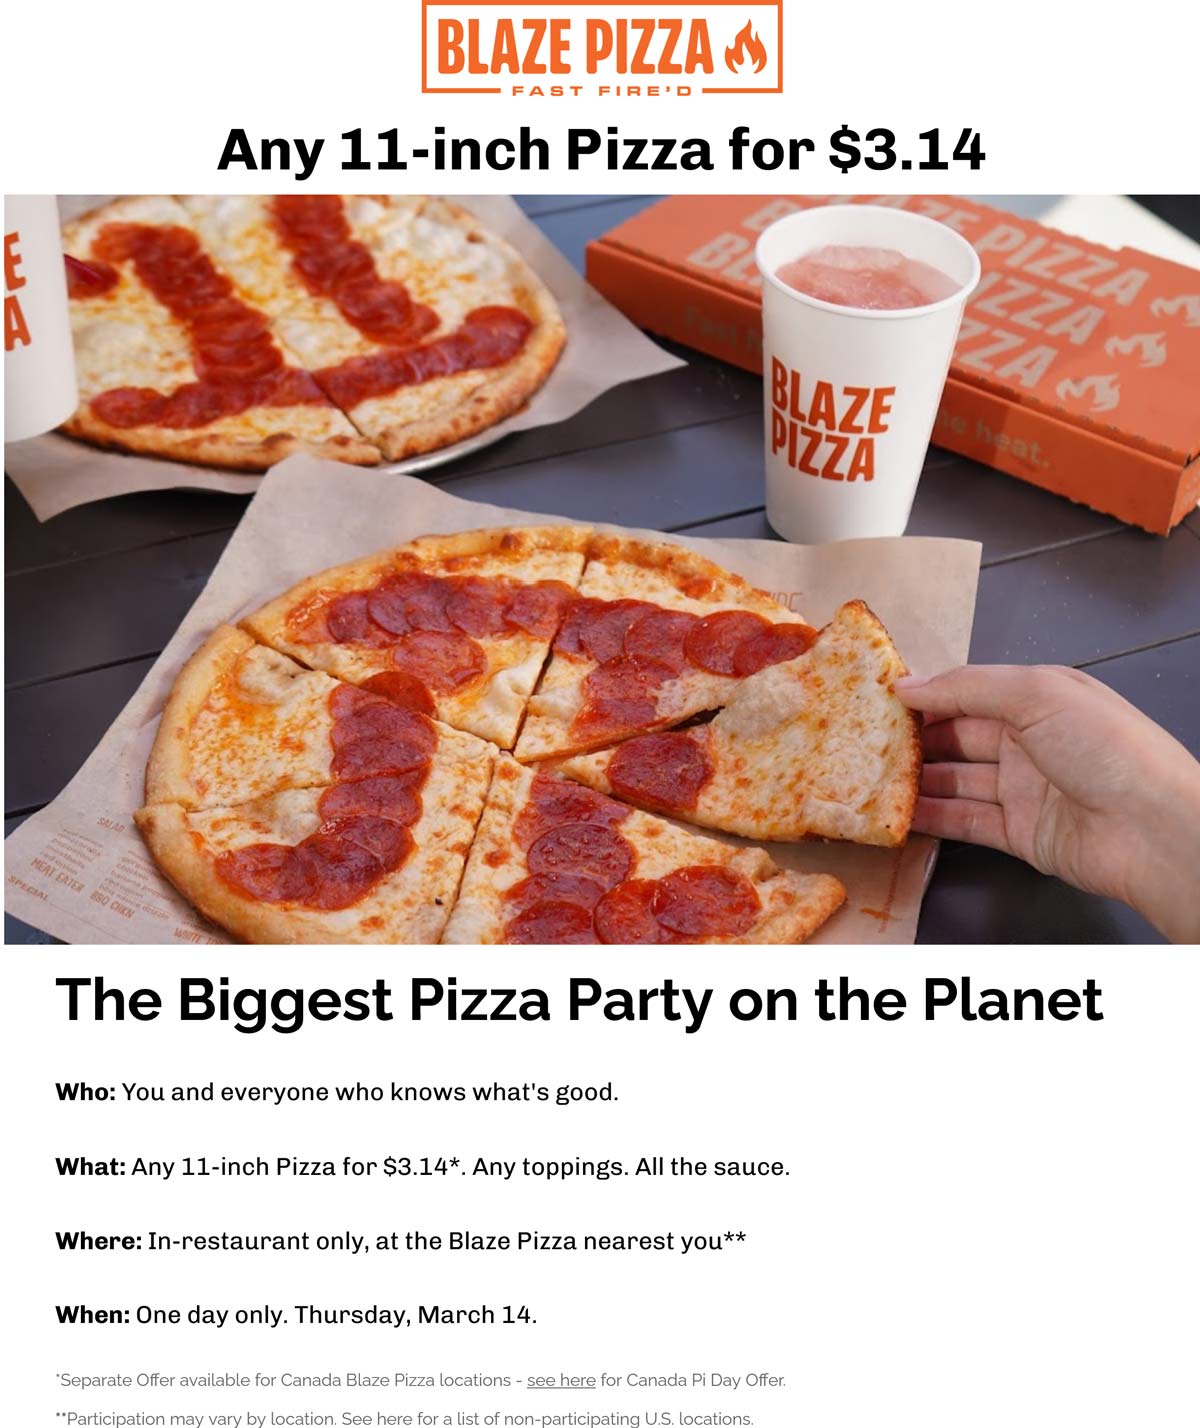 Blaze Pizza restaurants Coupon  $3.14 pizza Thursday at Blaze Pizza #blazepizza 